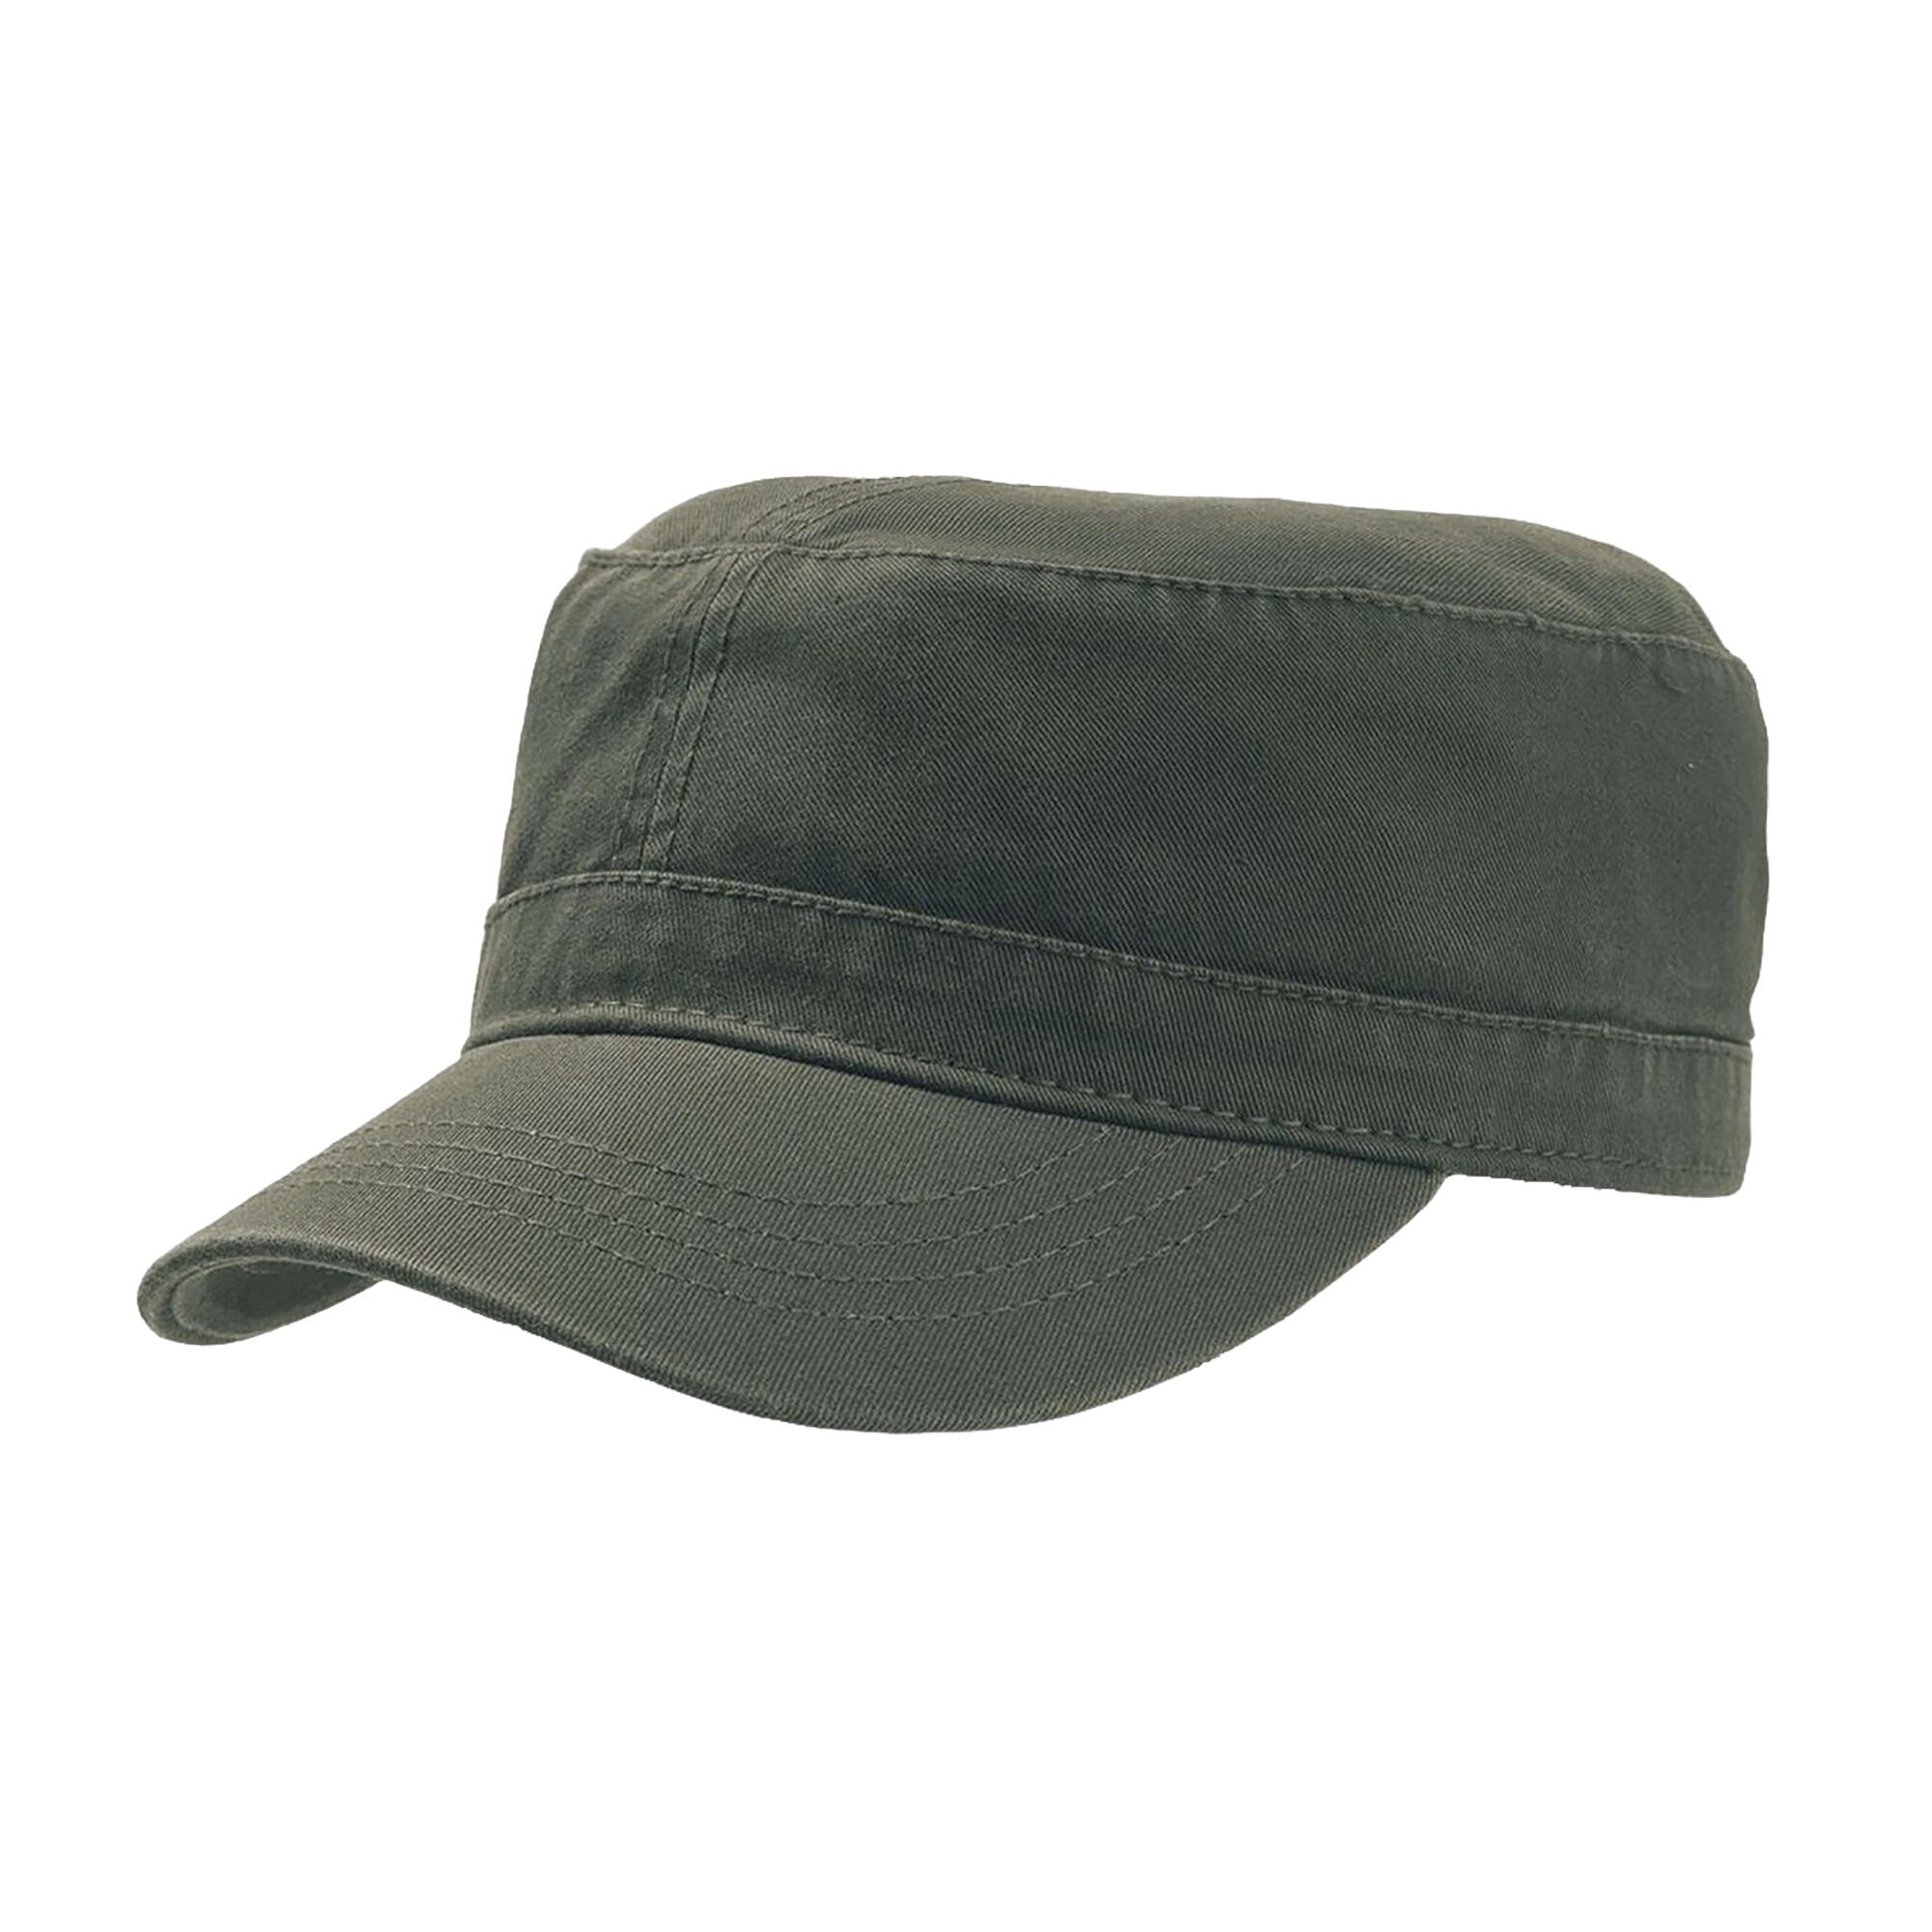 Chino Cotton Uniform Military Cap (Olive) 1/3